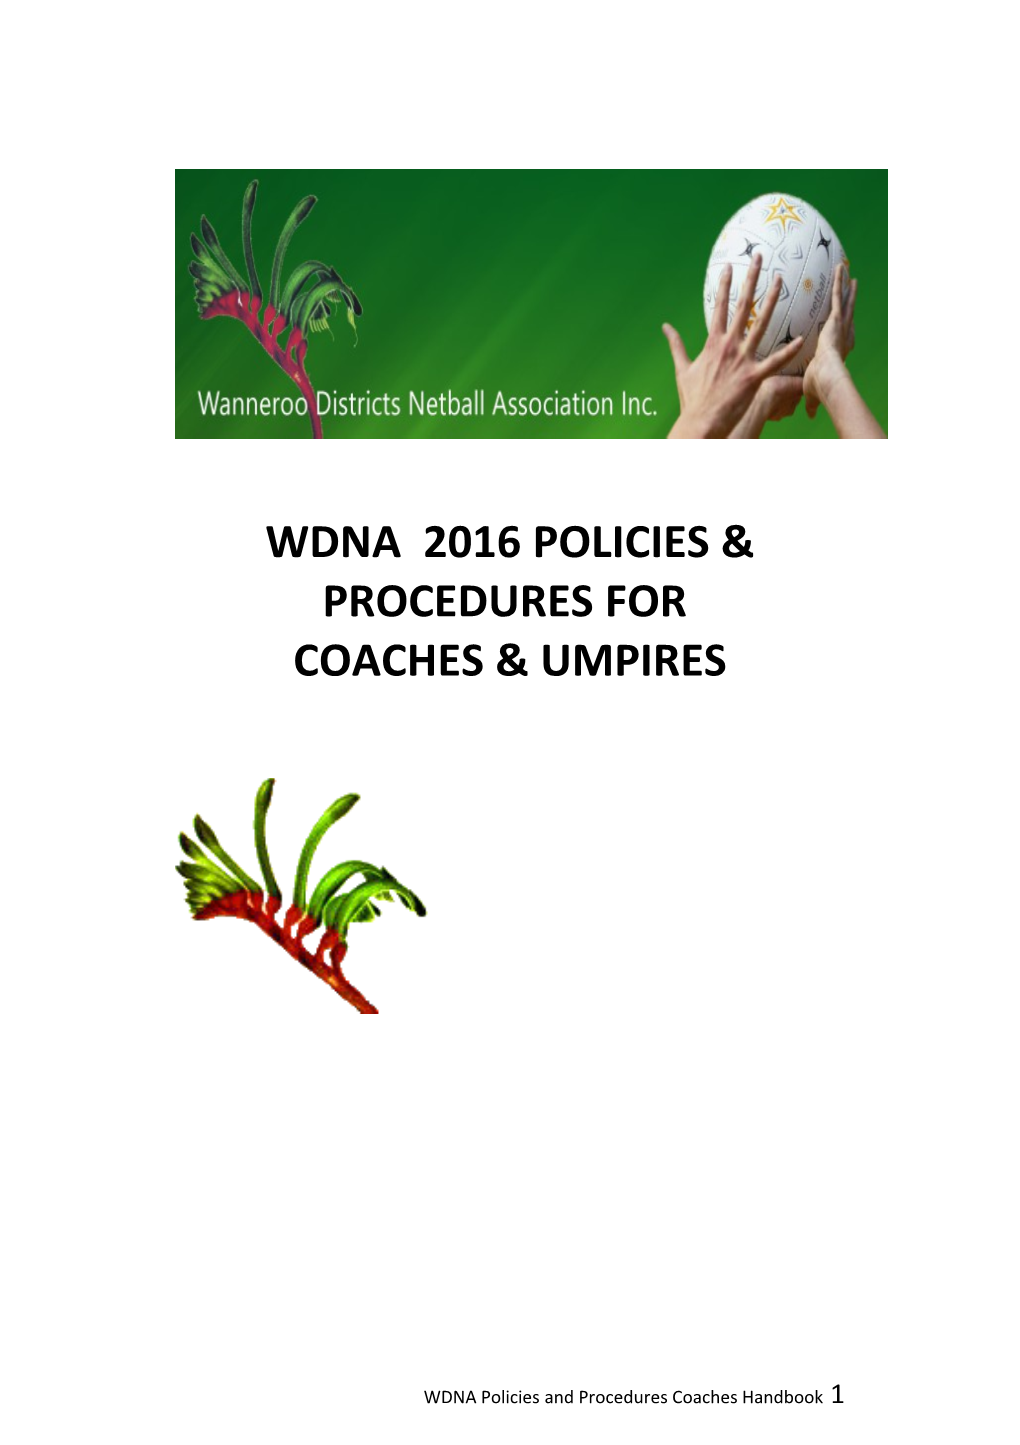 Wdna 2016 Policies & Procedures for Coaches & Umpires